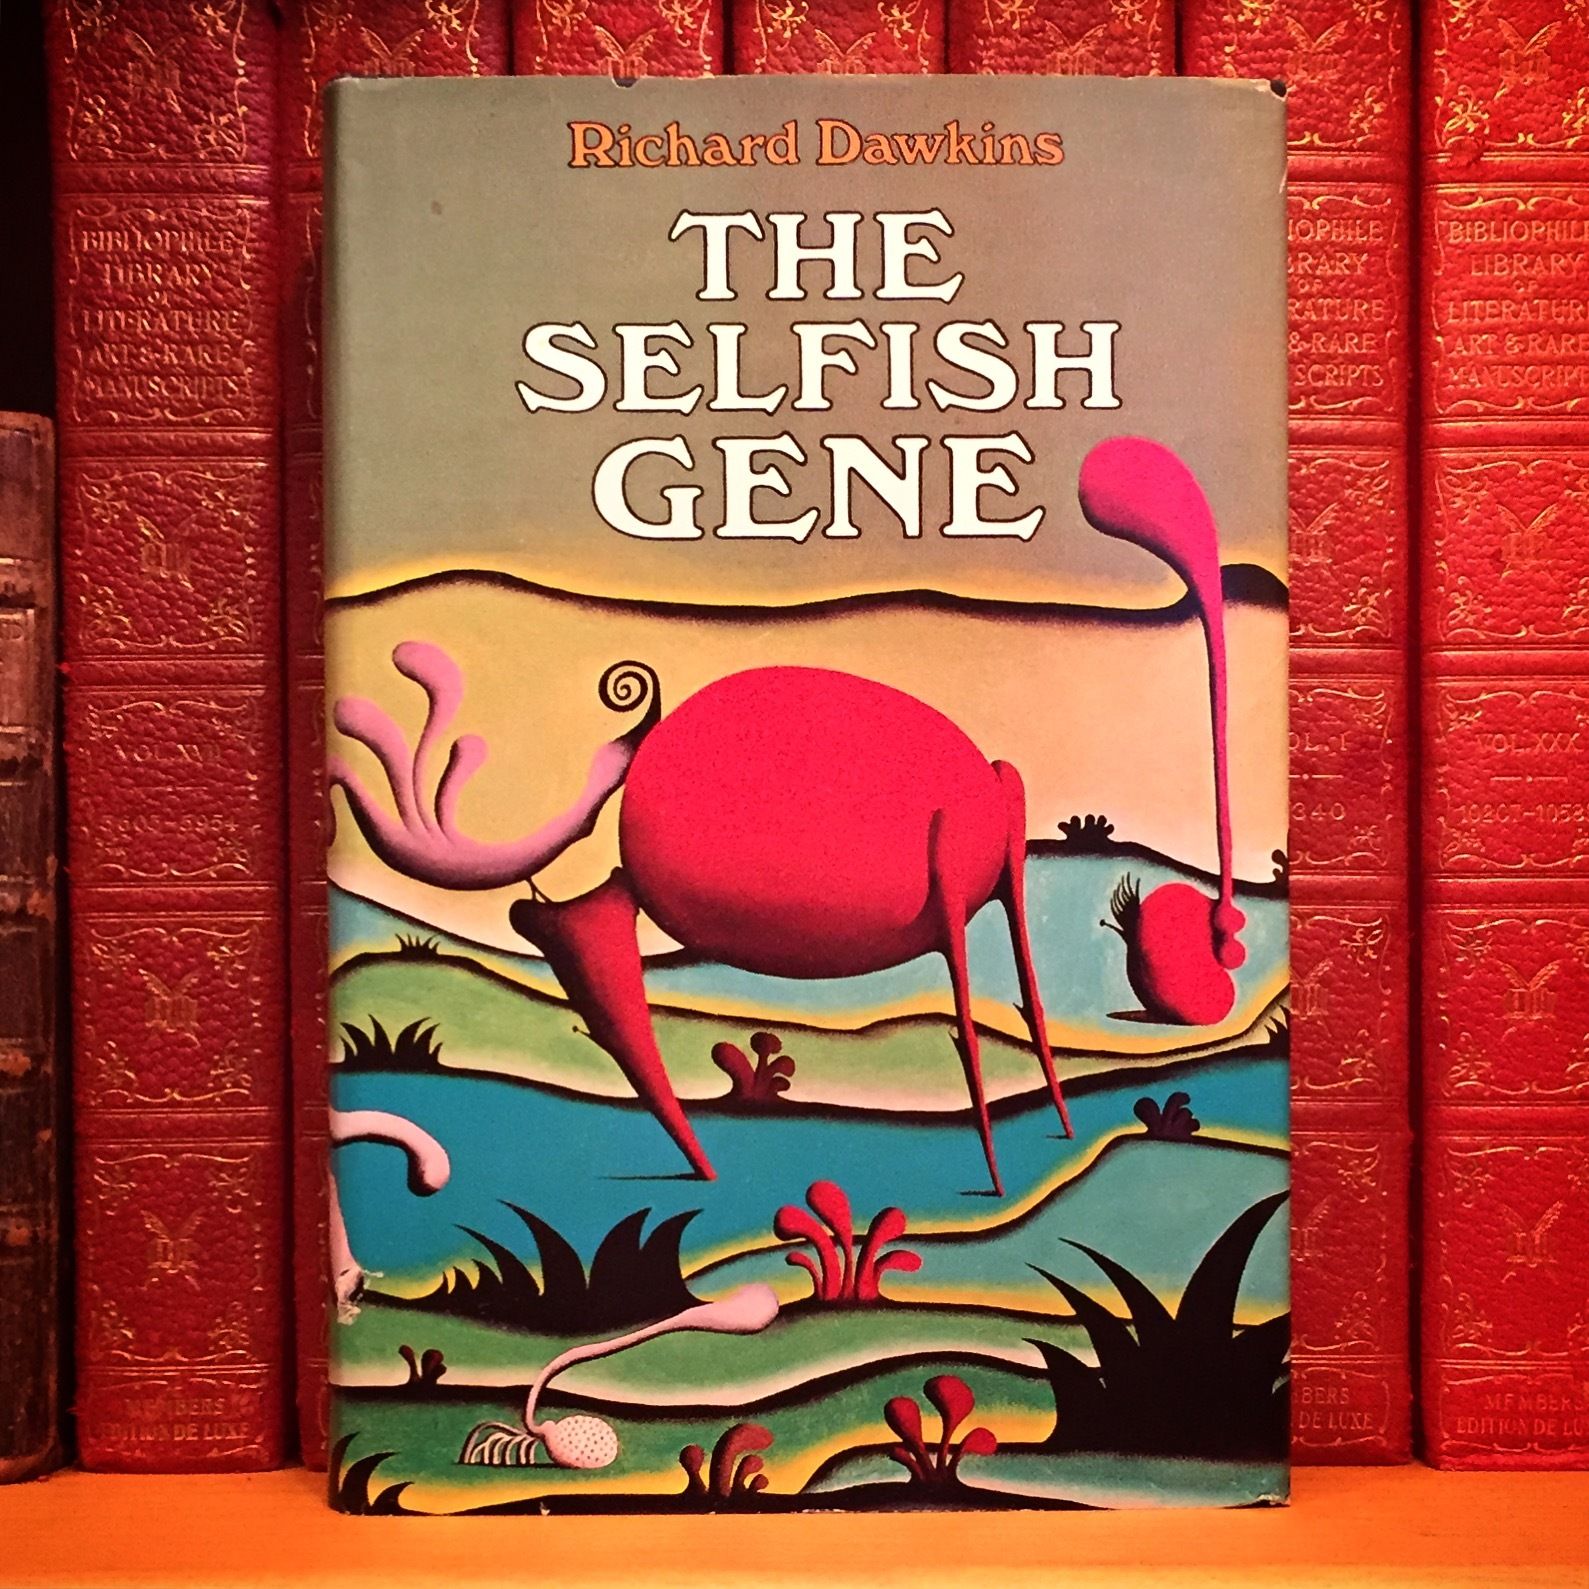 The book was published. Эгоистичный ген книга. The Selfish Gene. Selfish Gene книга.